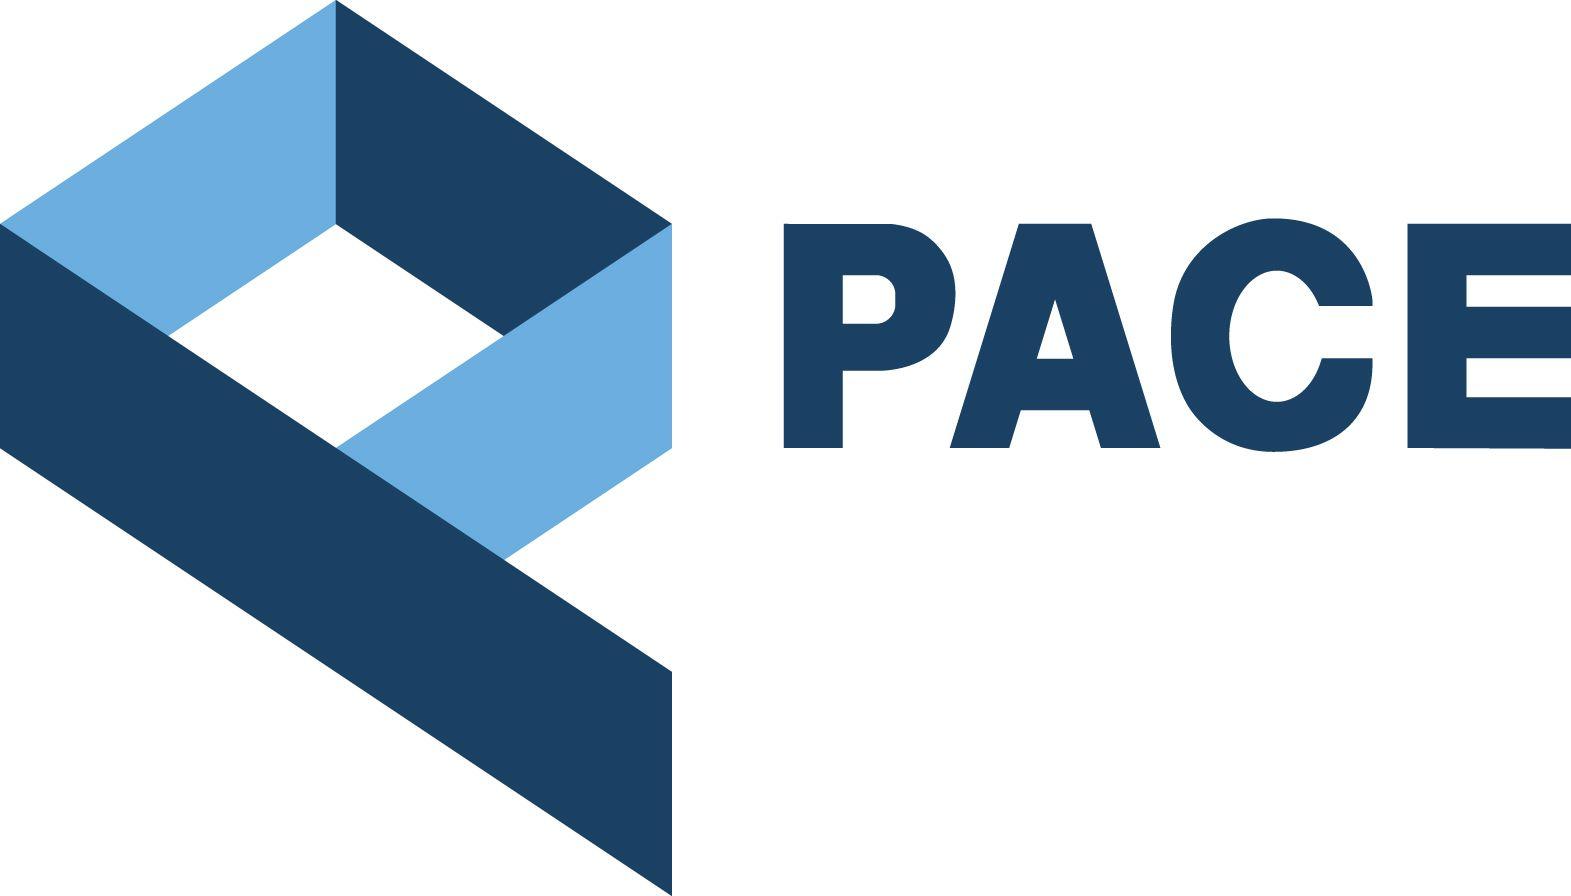 Pace Logo - File:PACE Logo(Blue).jpg - Wikimedia Commons